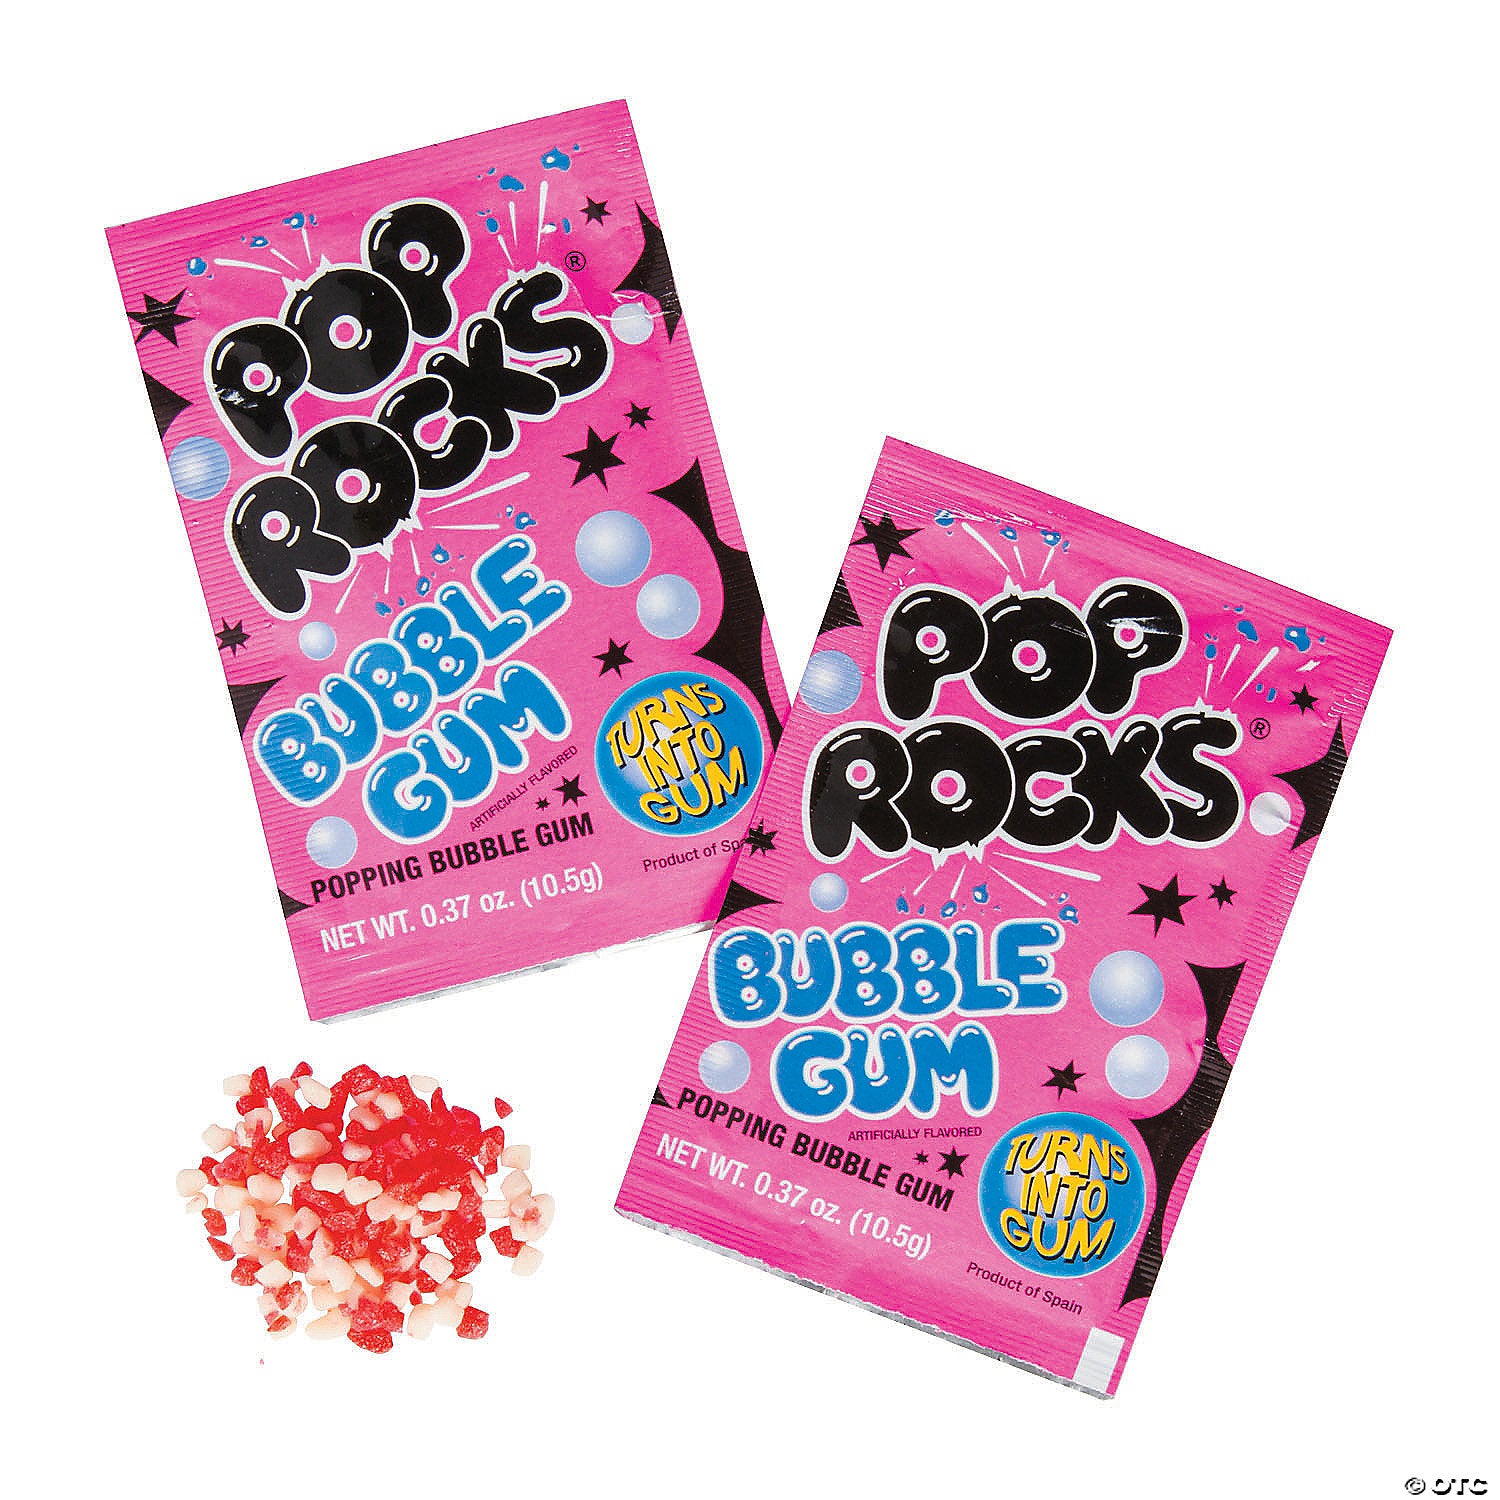 Bukser sagde Endelig Pop Rocks Bubble Gum Popping Gum - .33-oz. Package - All City Candy